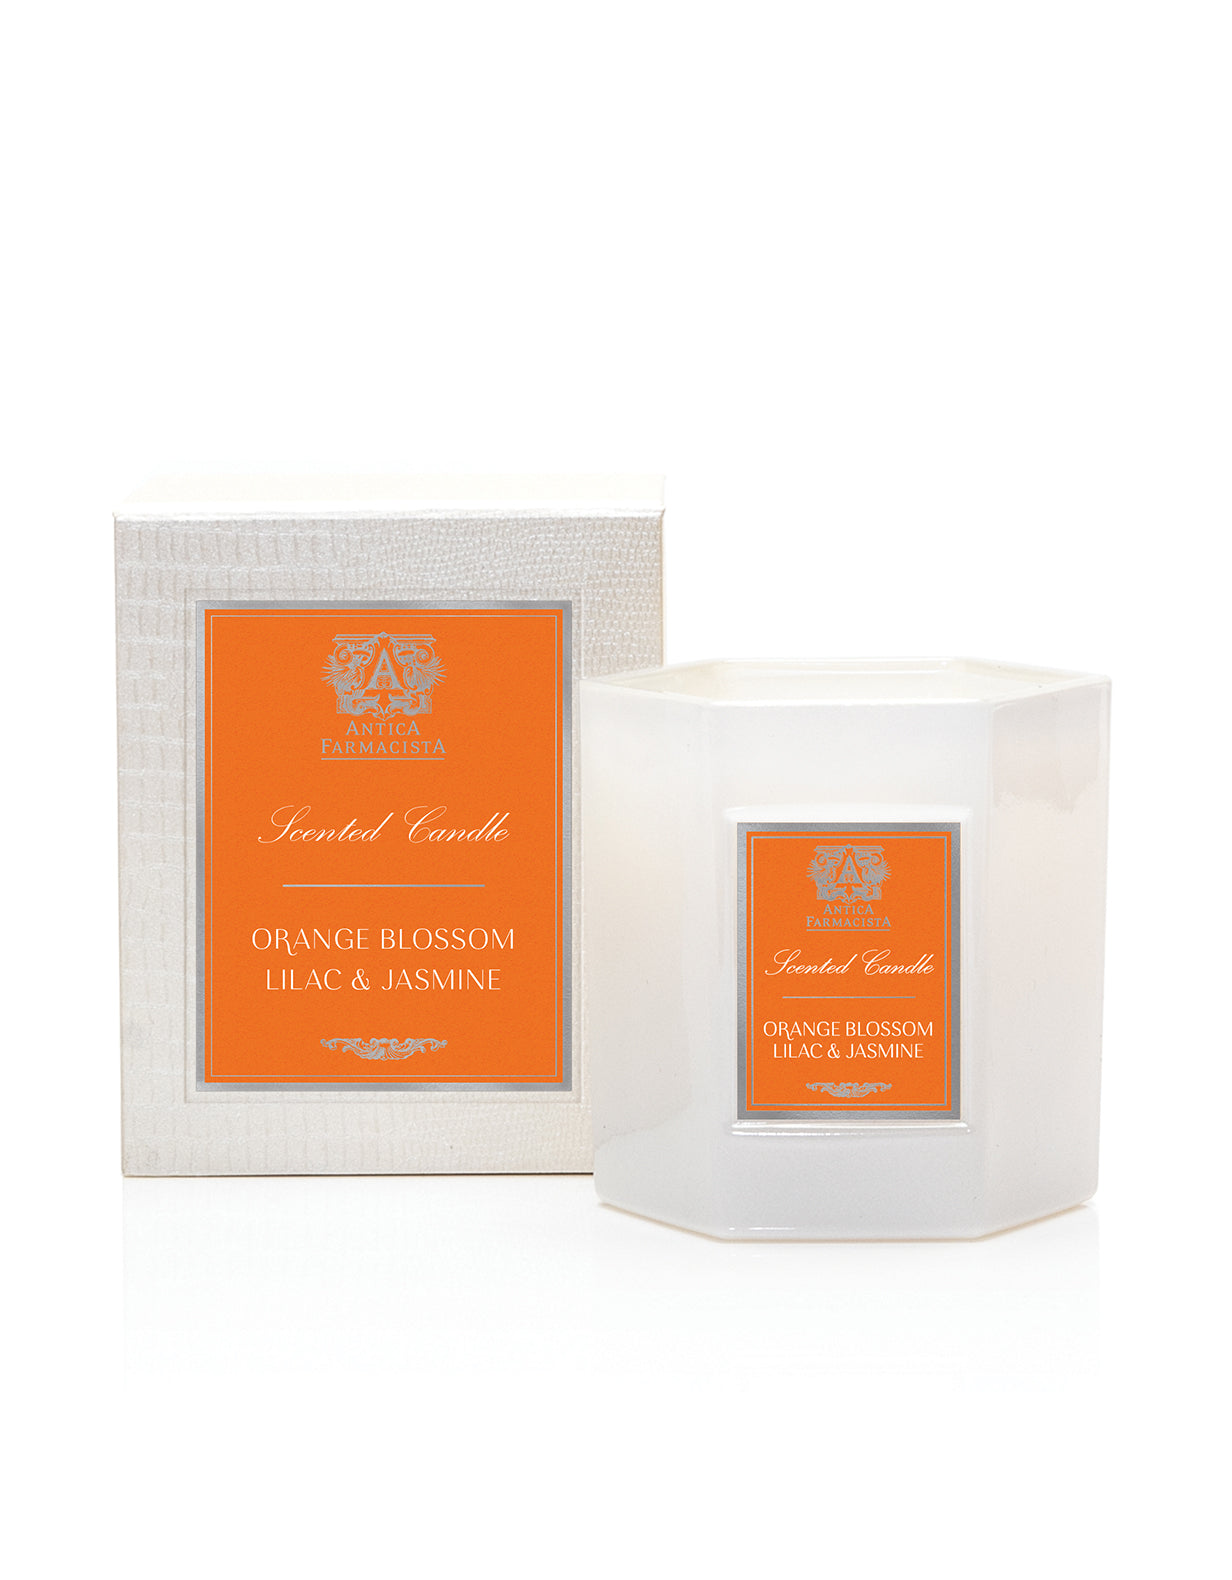 Orange Blossom, Lilac & Jasmine Candle